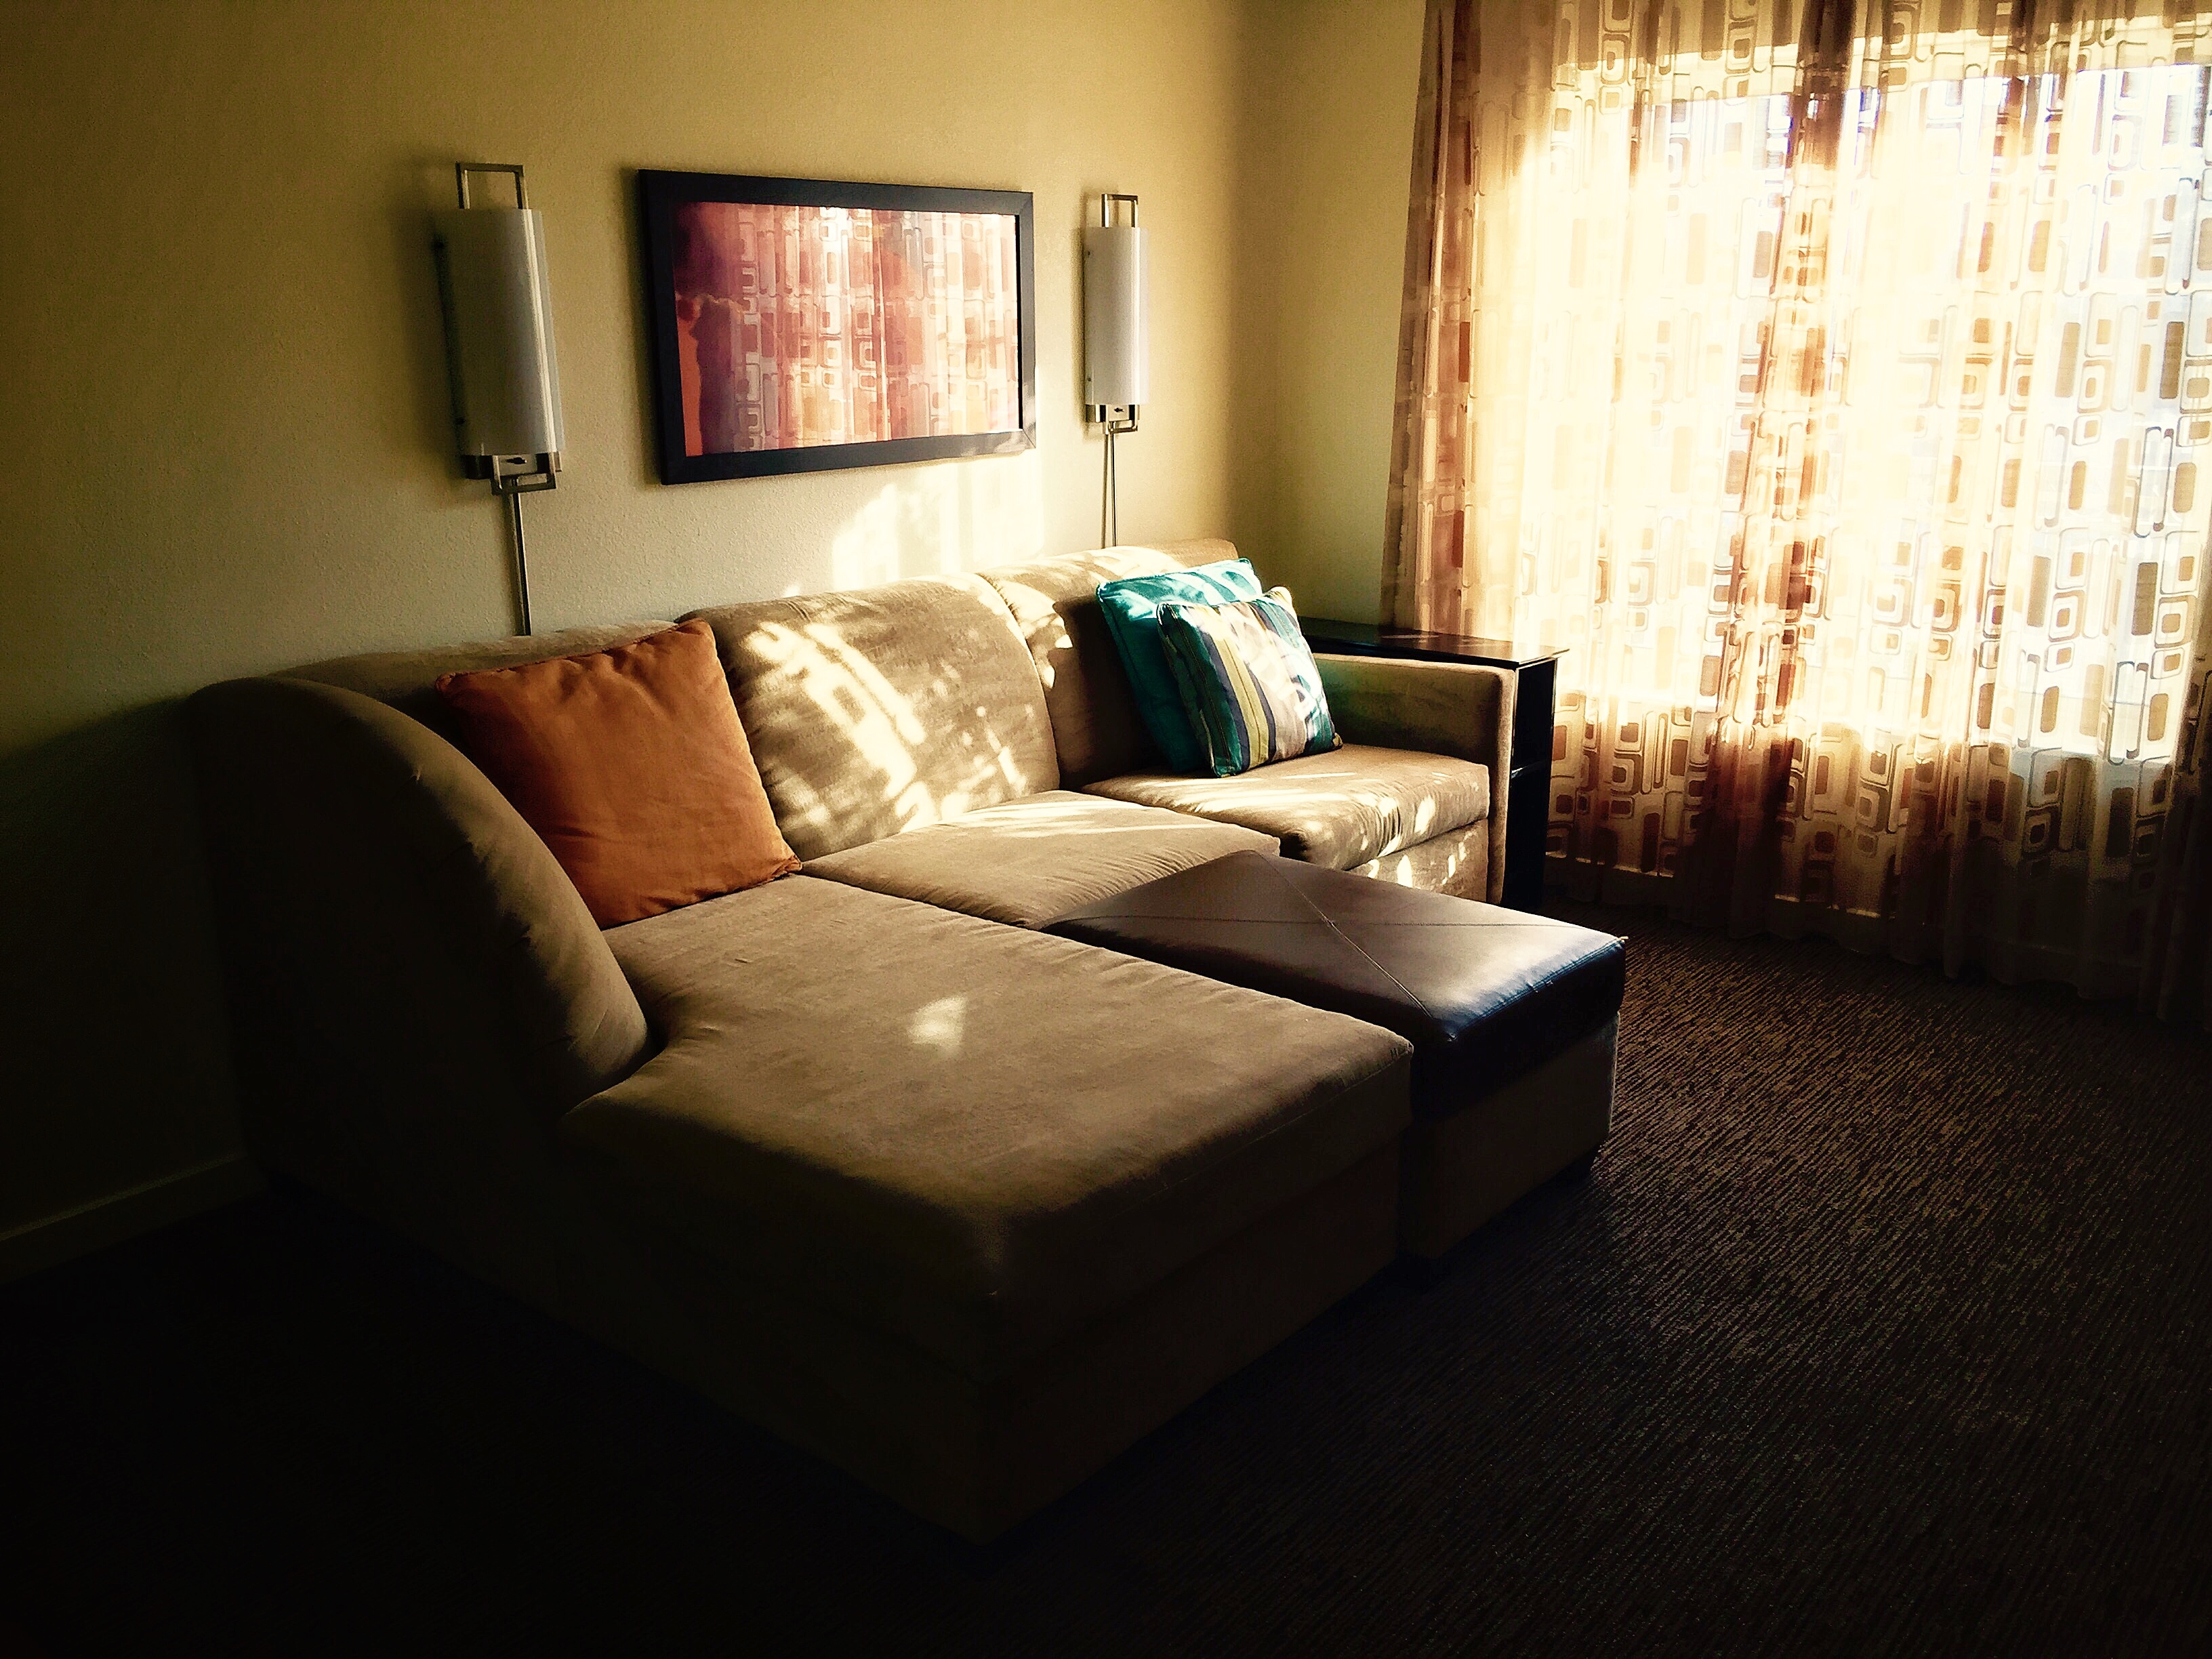 Sofa Ottoman Cushion Room Light 3264x2448